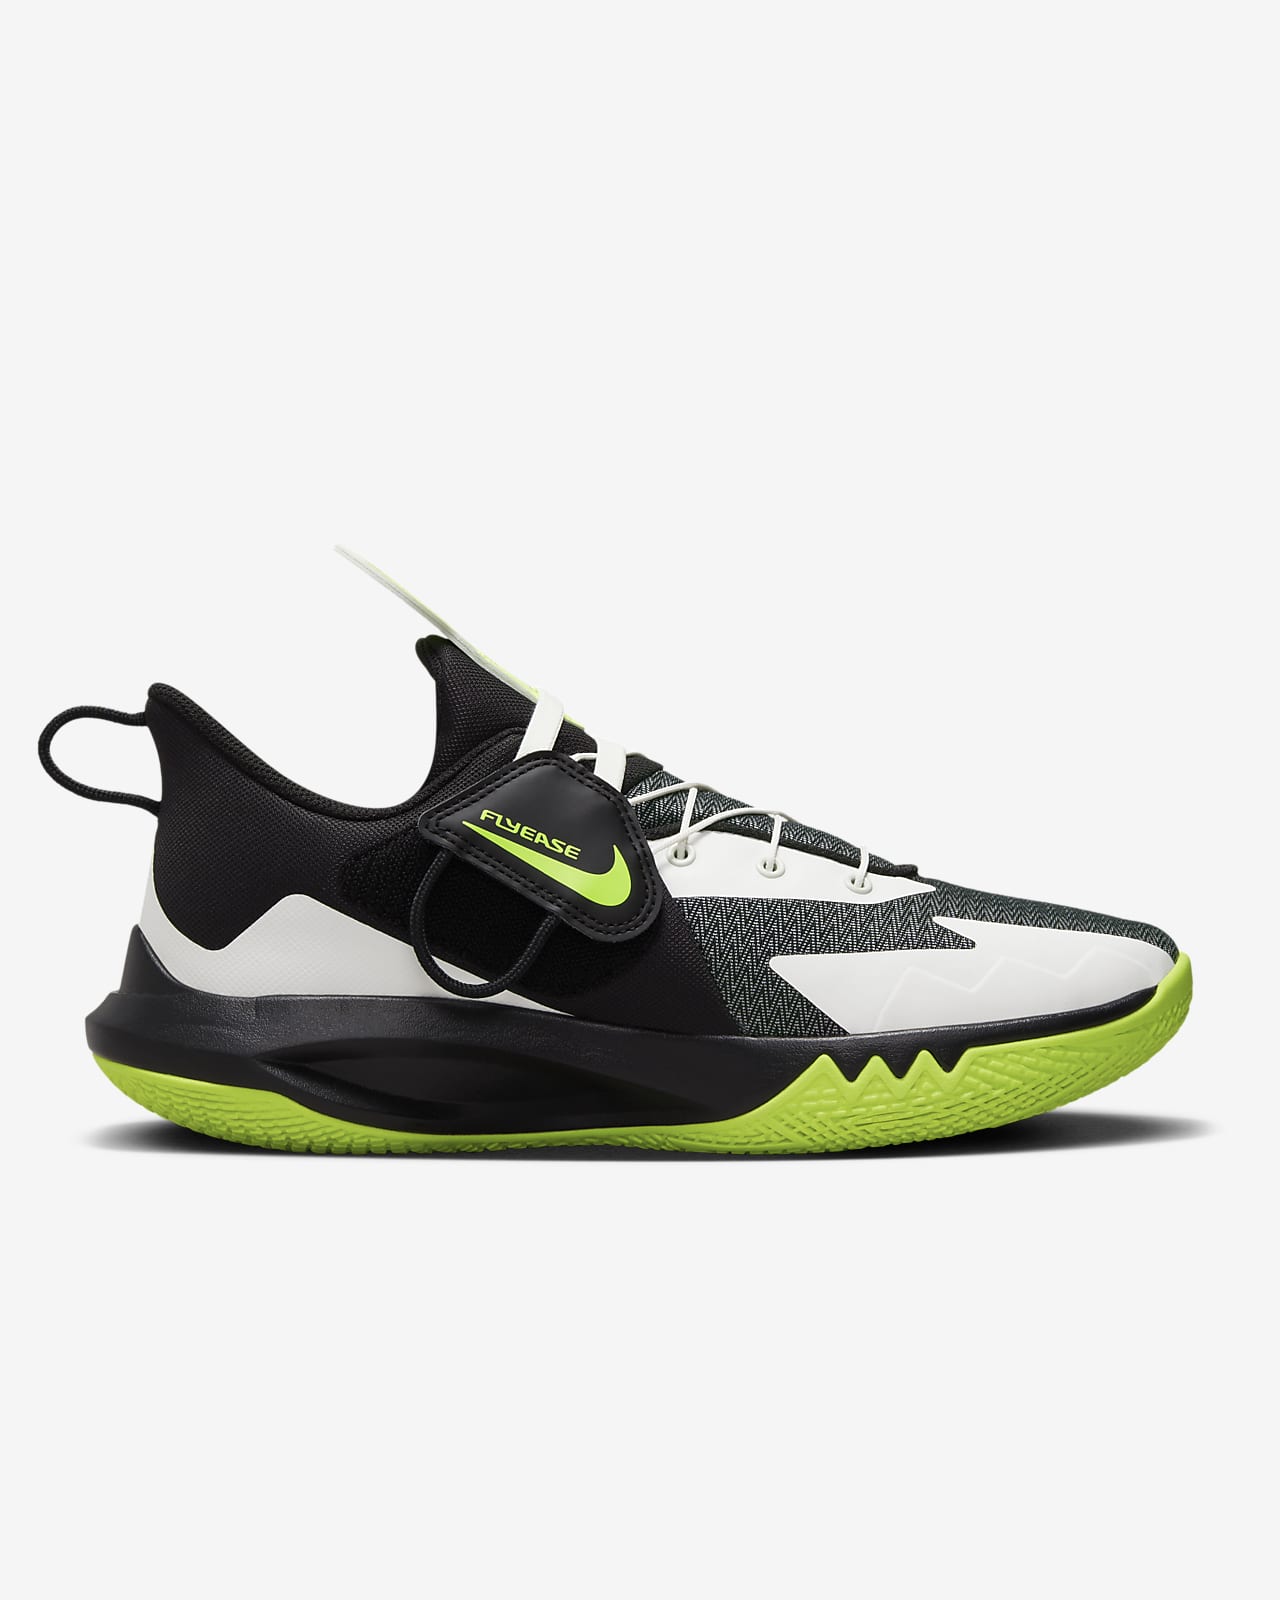 Nike, Precision 6 Basketball Shoes